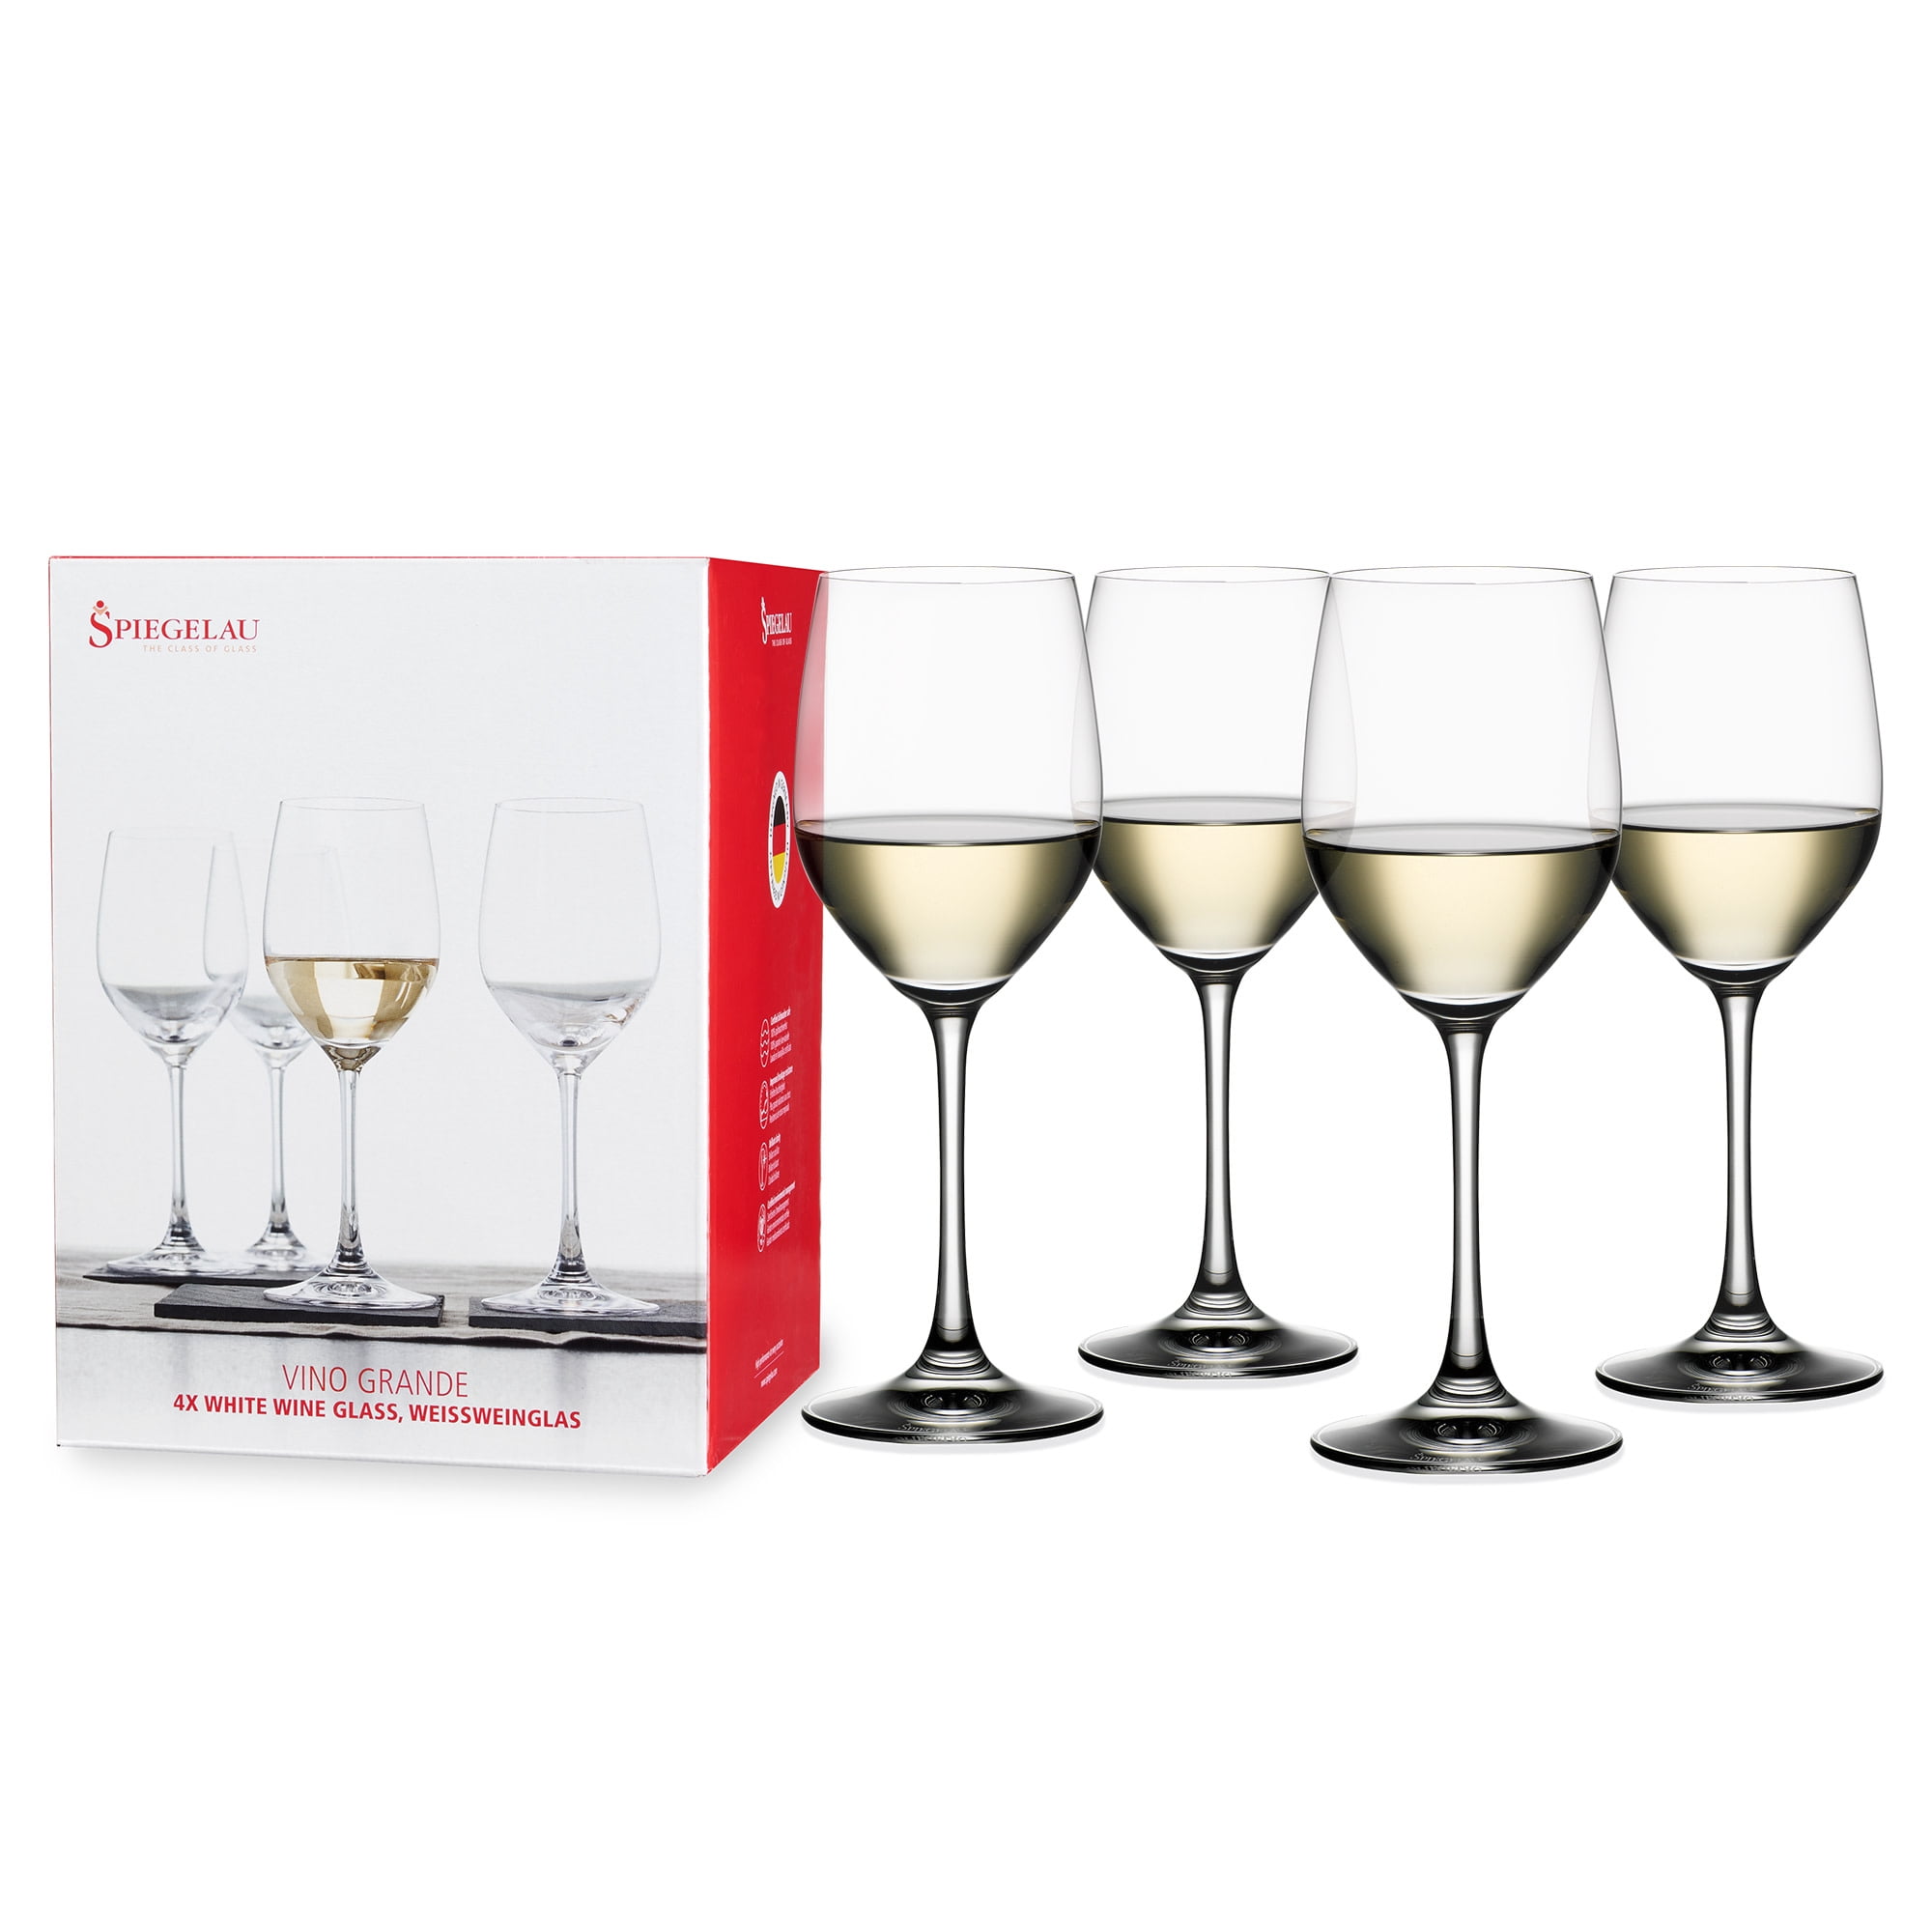 Miko Wine Glasses, Pure Lead Free Crystal, Wine Glass Set of 6 (Burgundy)